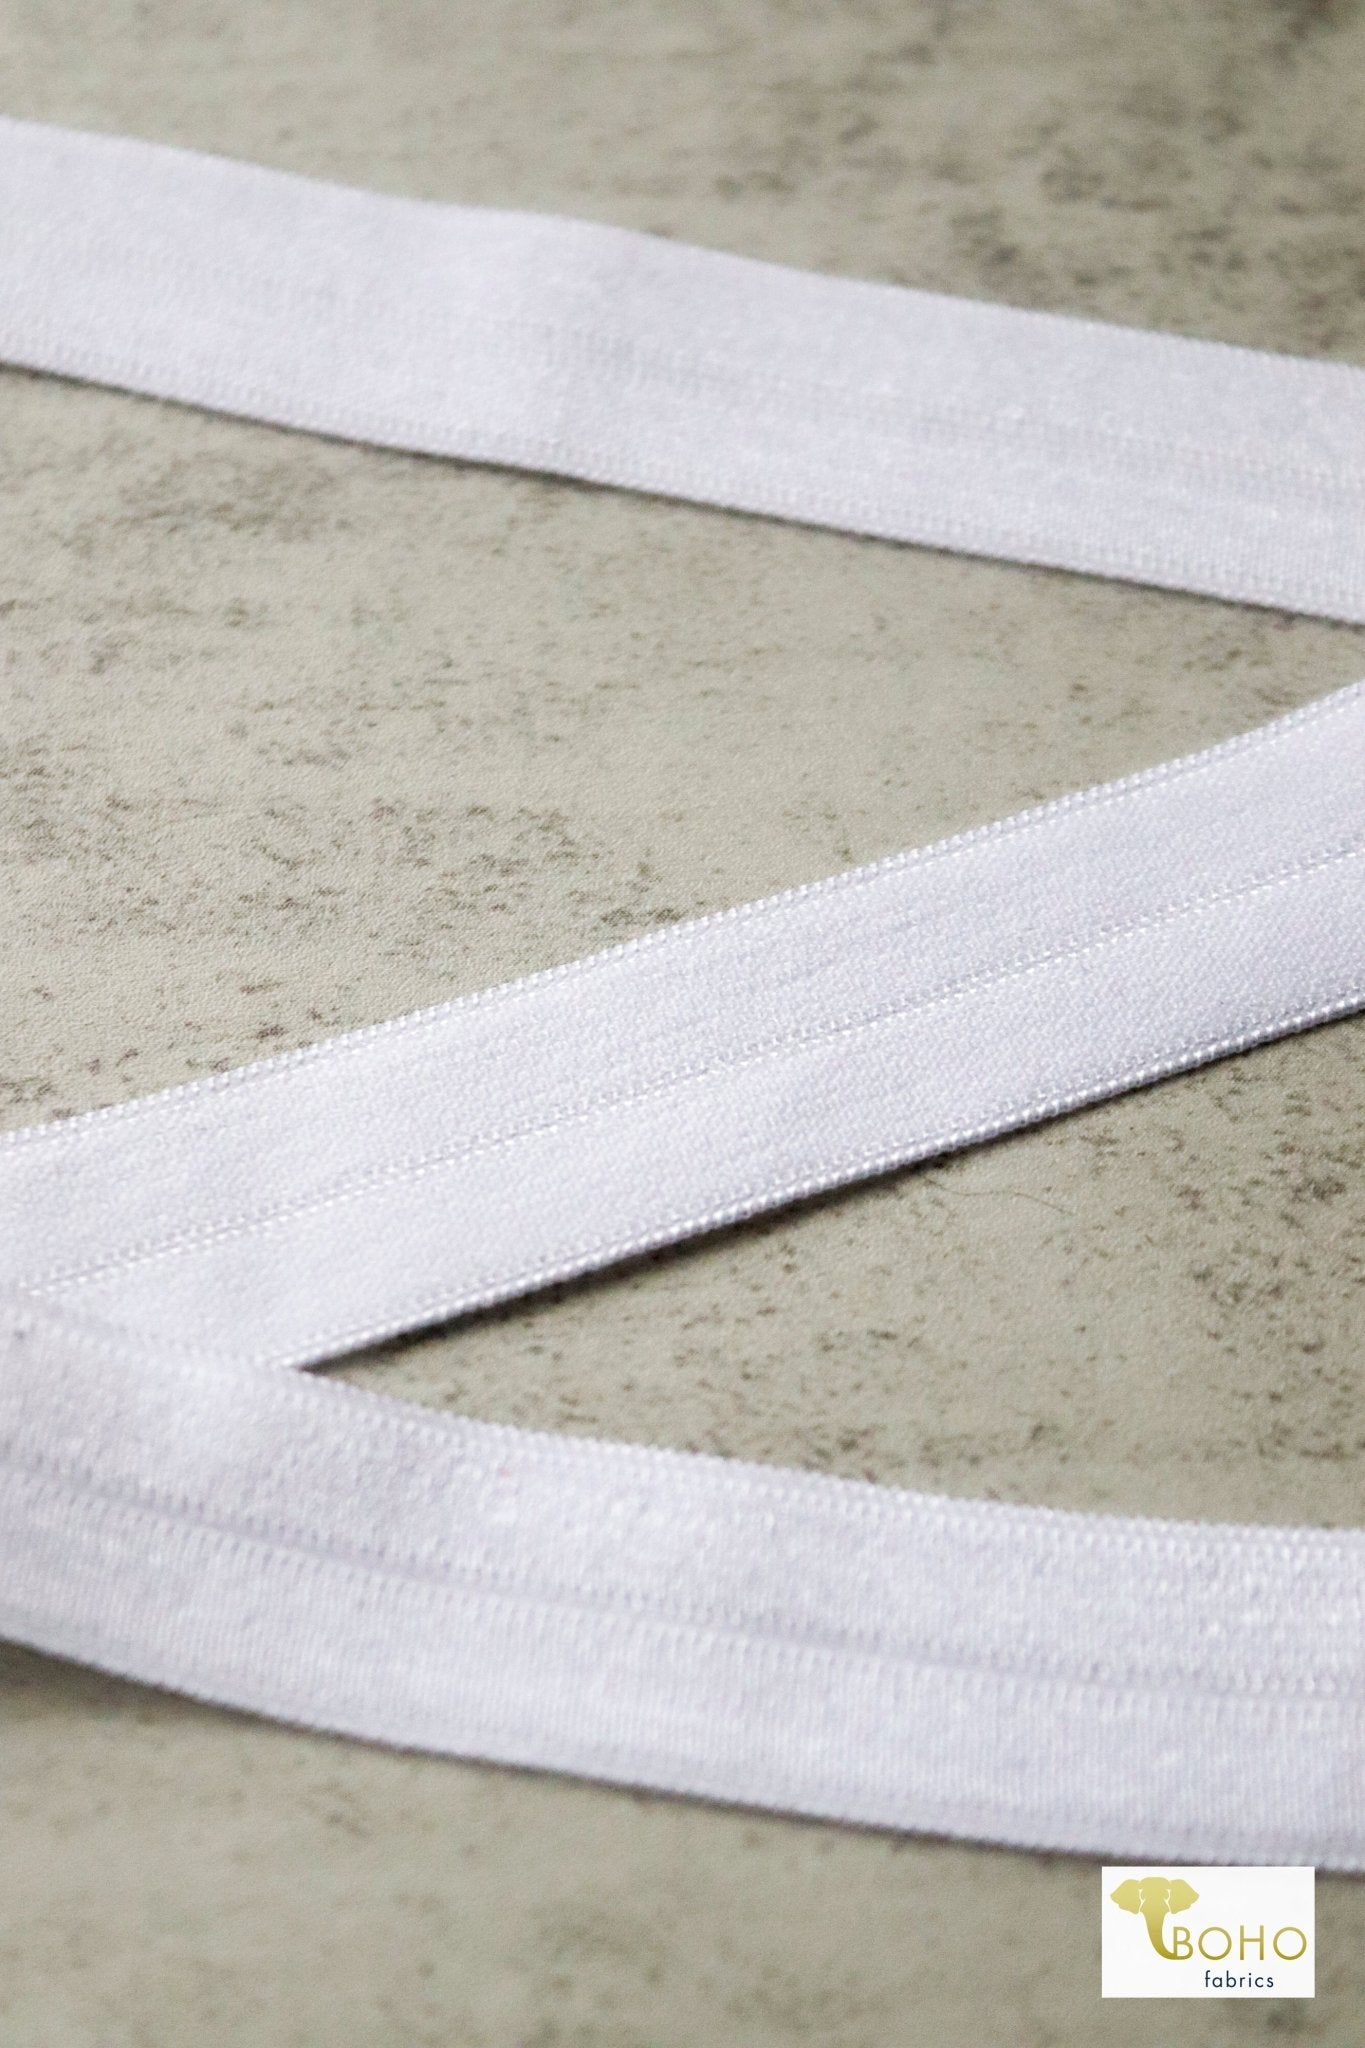 5/8" White, Fold Over Elastic. SOLD PER PACKAGE OF 3 YARDS. - Boho Fabrics